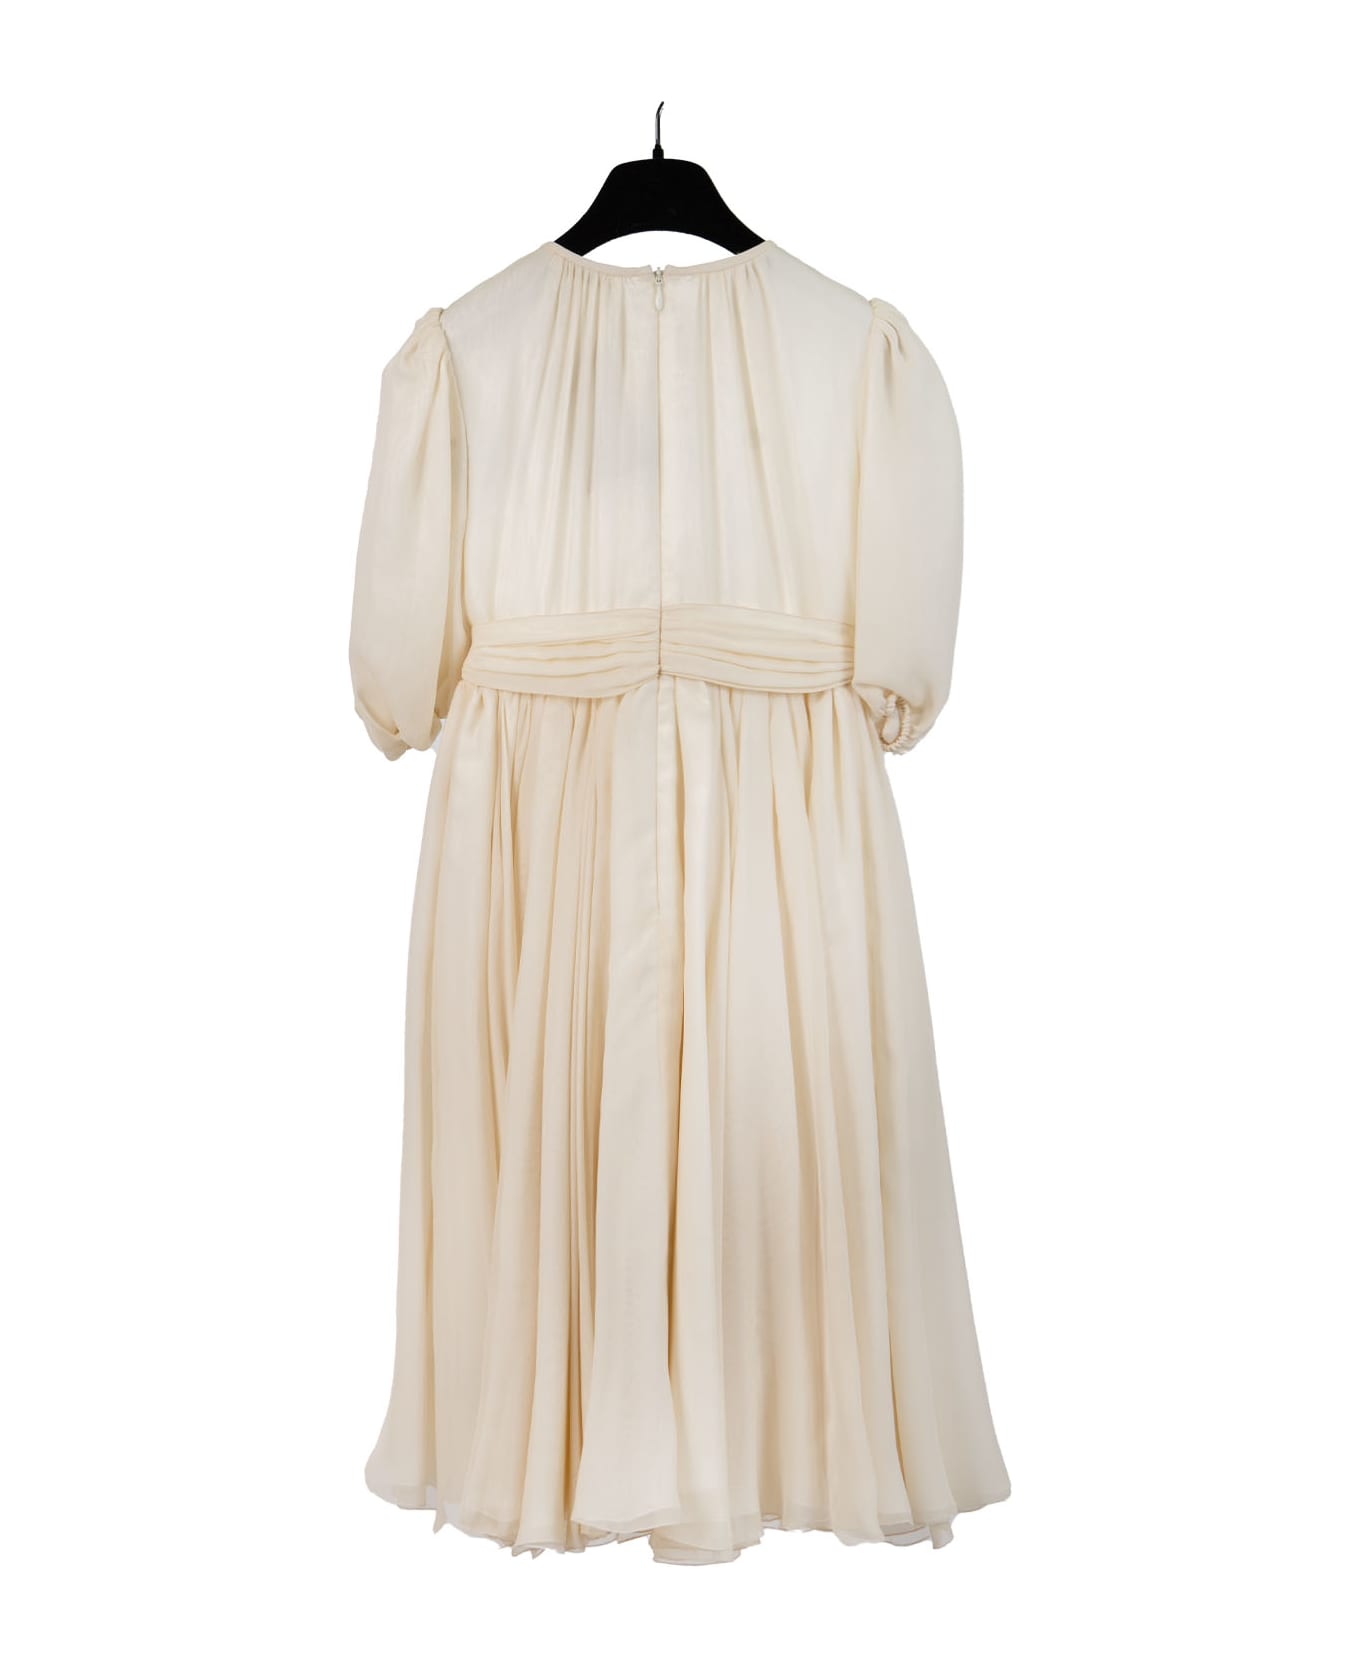 Dolce belt & Gabbana Silk Dress